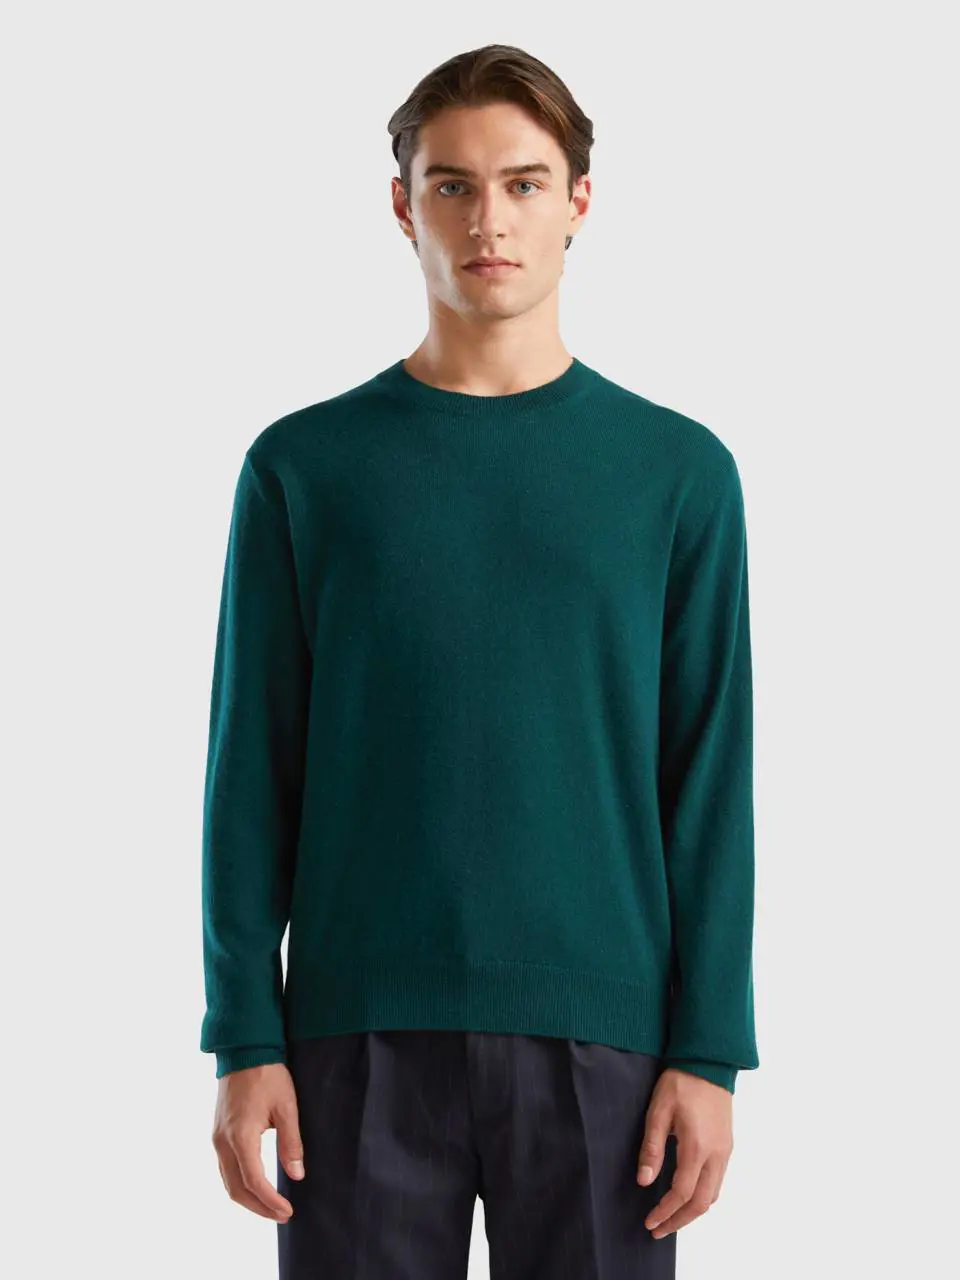 Benetton dark green sweater in pure cashmere. 1